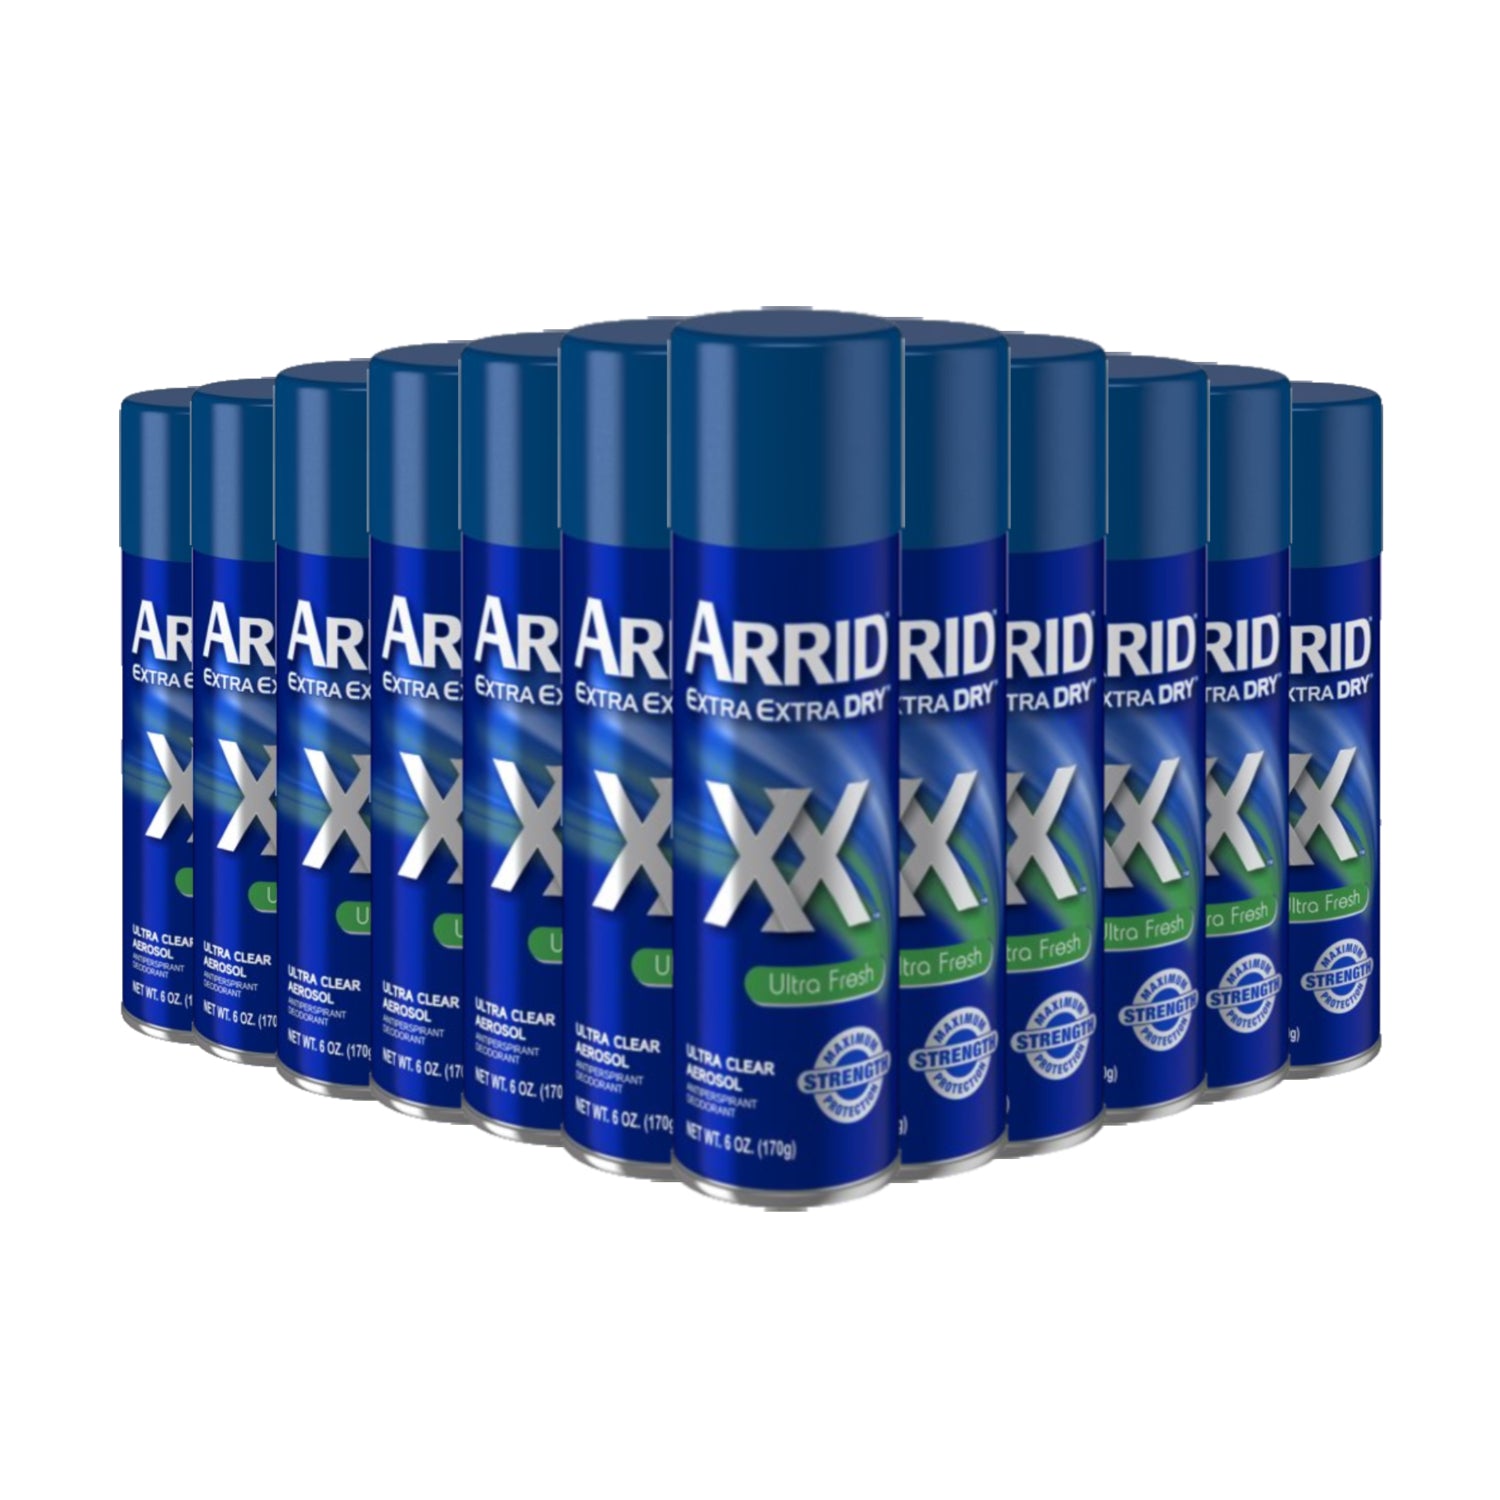 Arrid XX Extra Extra Dry Solid Antiperspirant Deodorant, Ultra